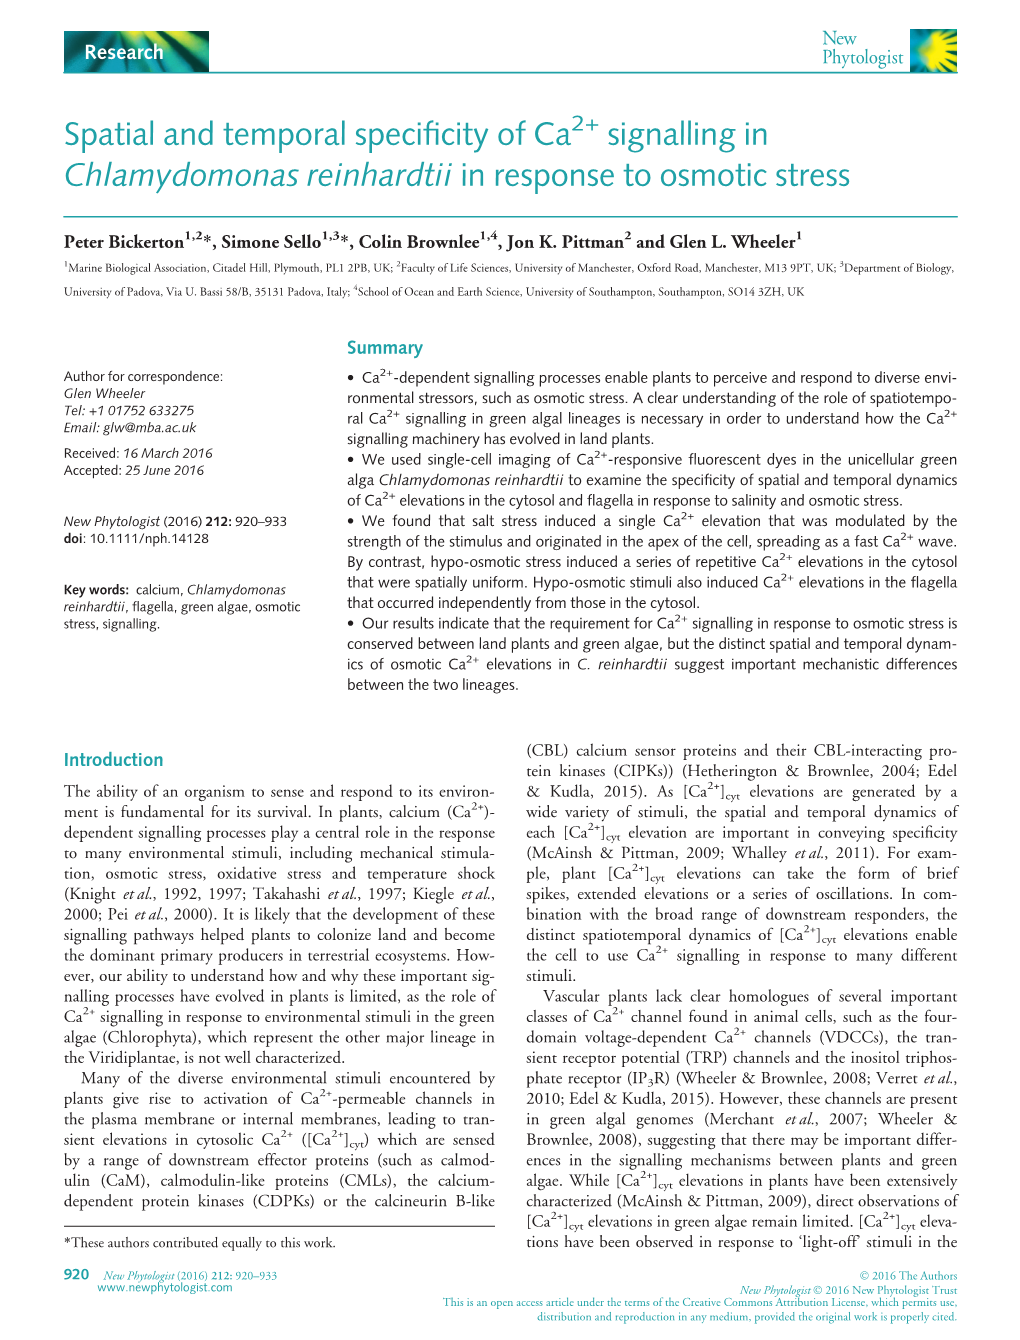 Signalling in Chlamydomonas Reinhardtii in Response to Osmotic Stress